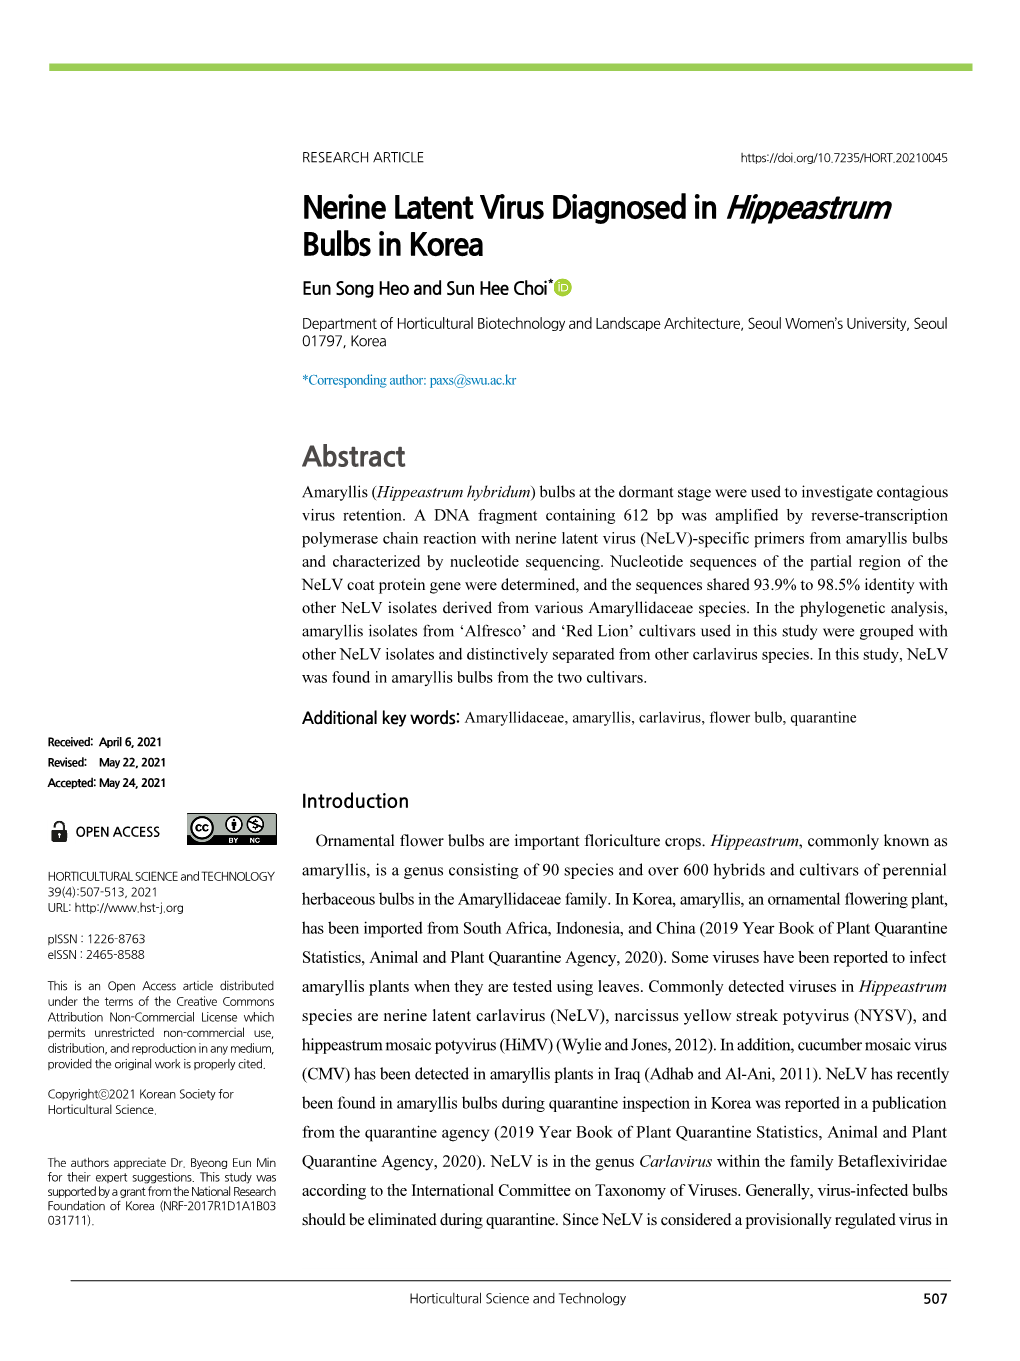 Nerine Latent Virus Diagnosed in Hippeastrum Bulbs in Korea